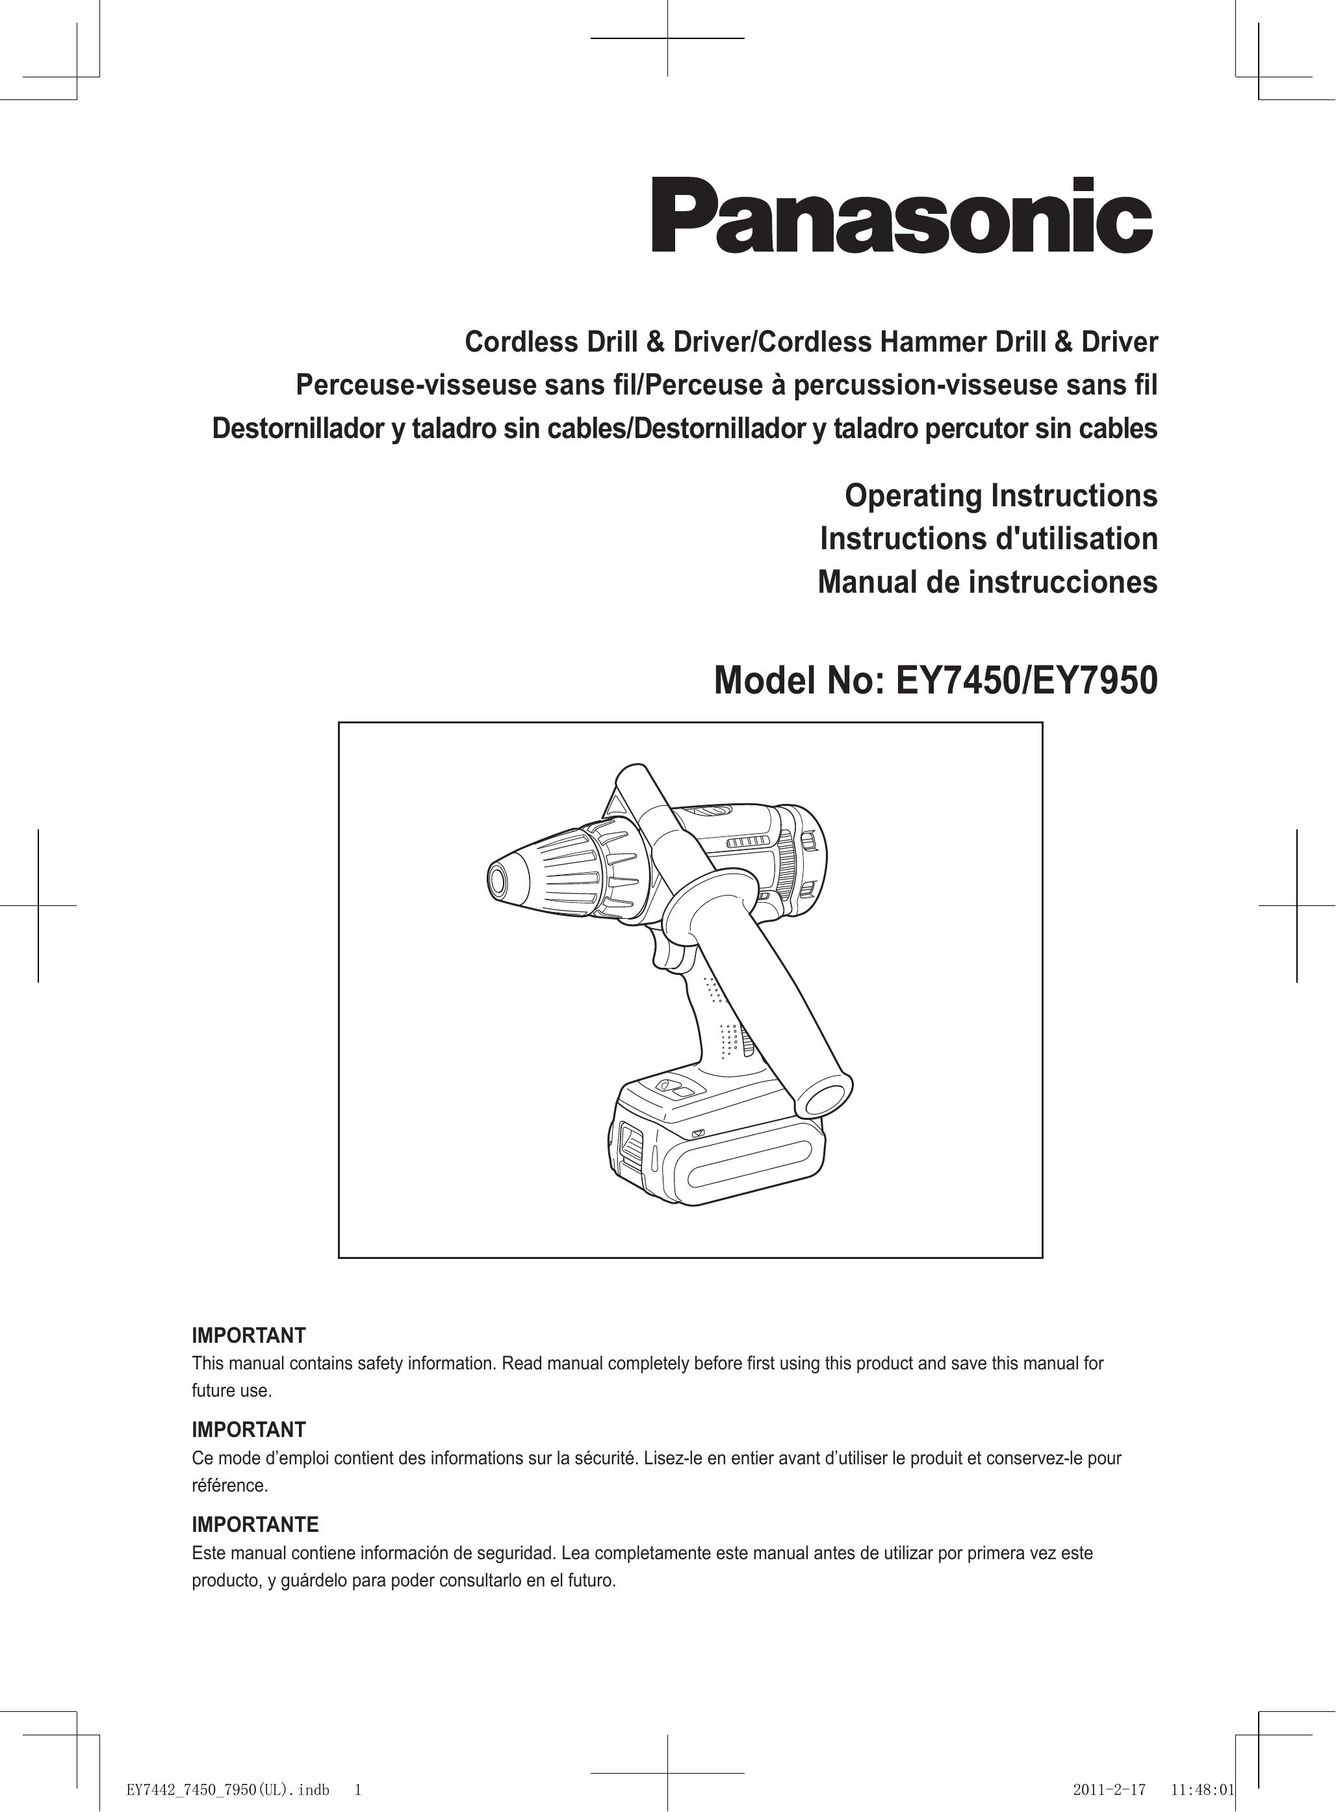 Panasonic EY7950 Cordless Drill User Manual